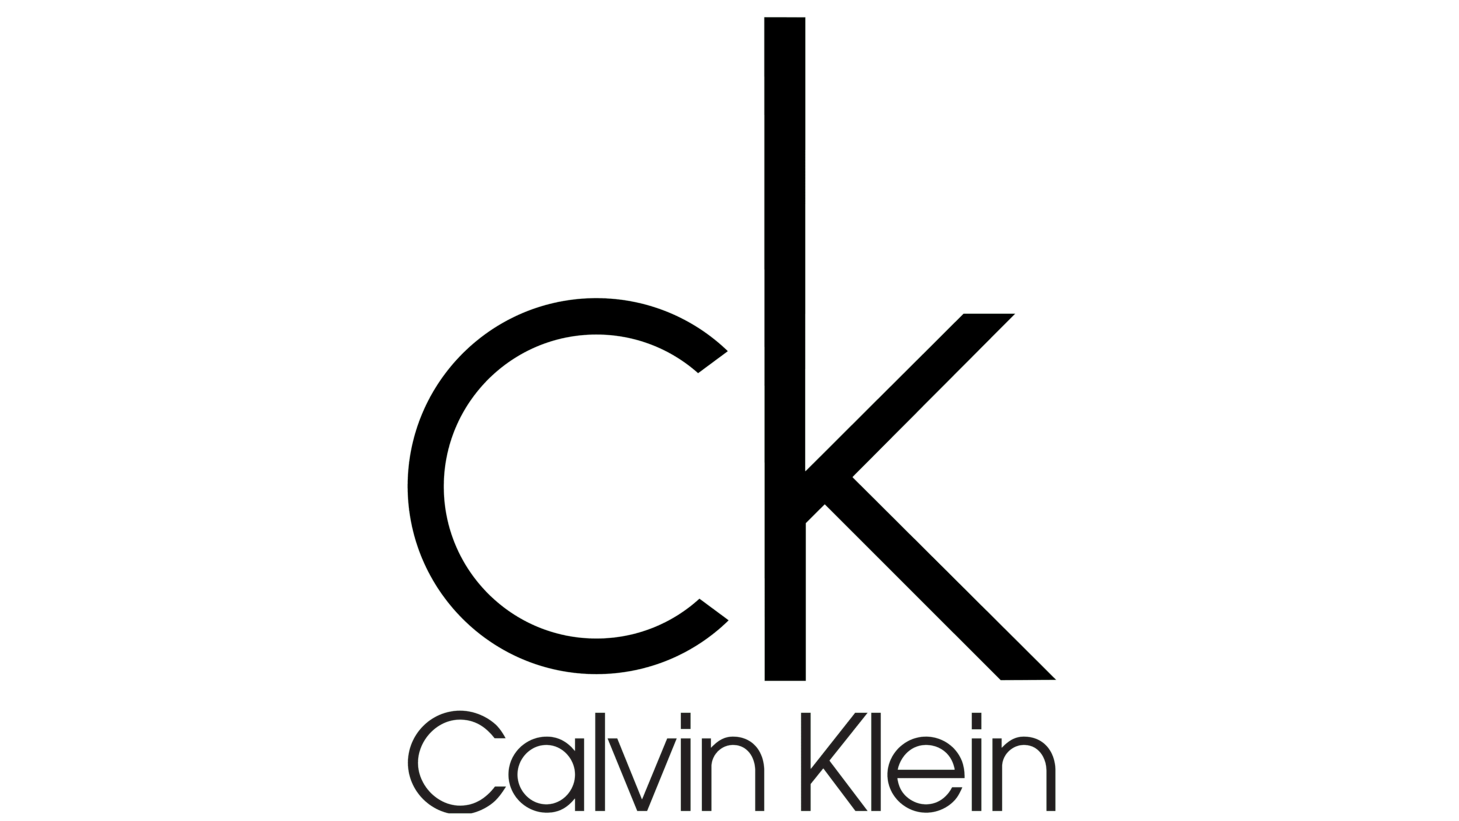 Calvin klein symbol